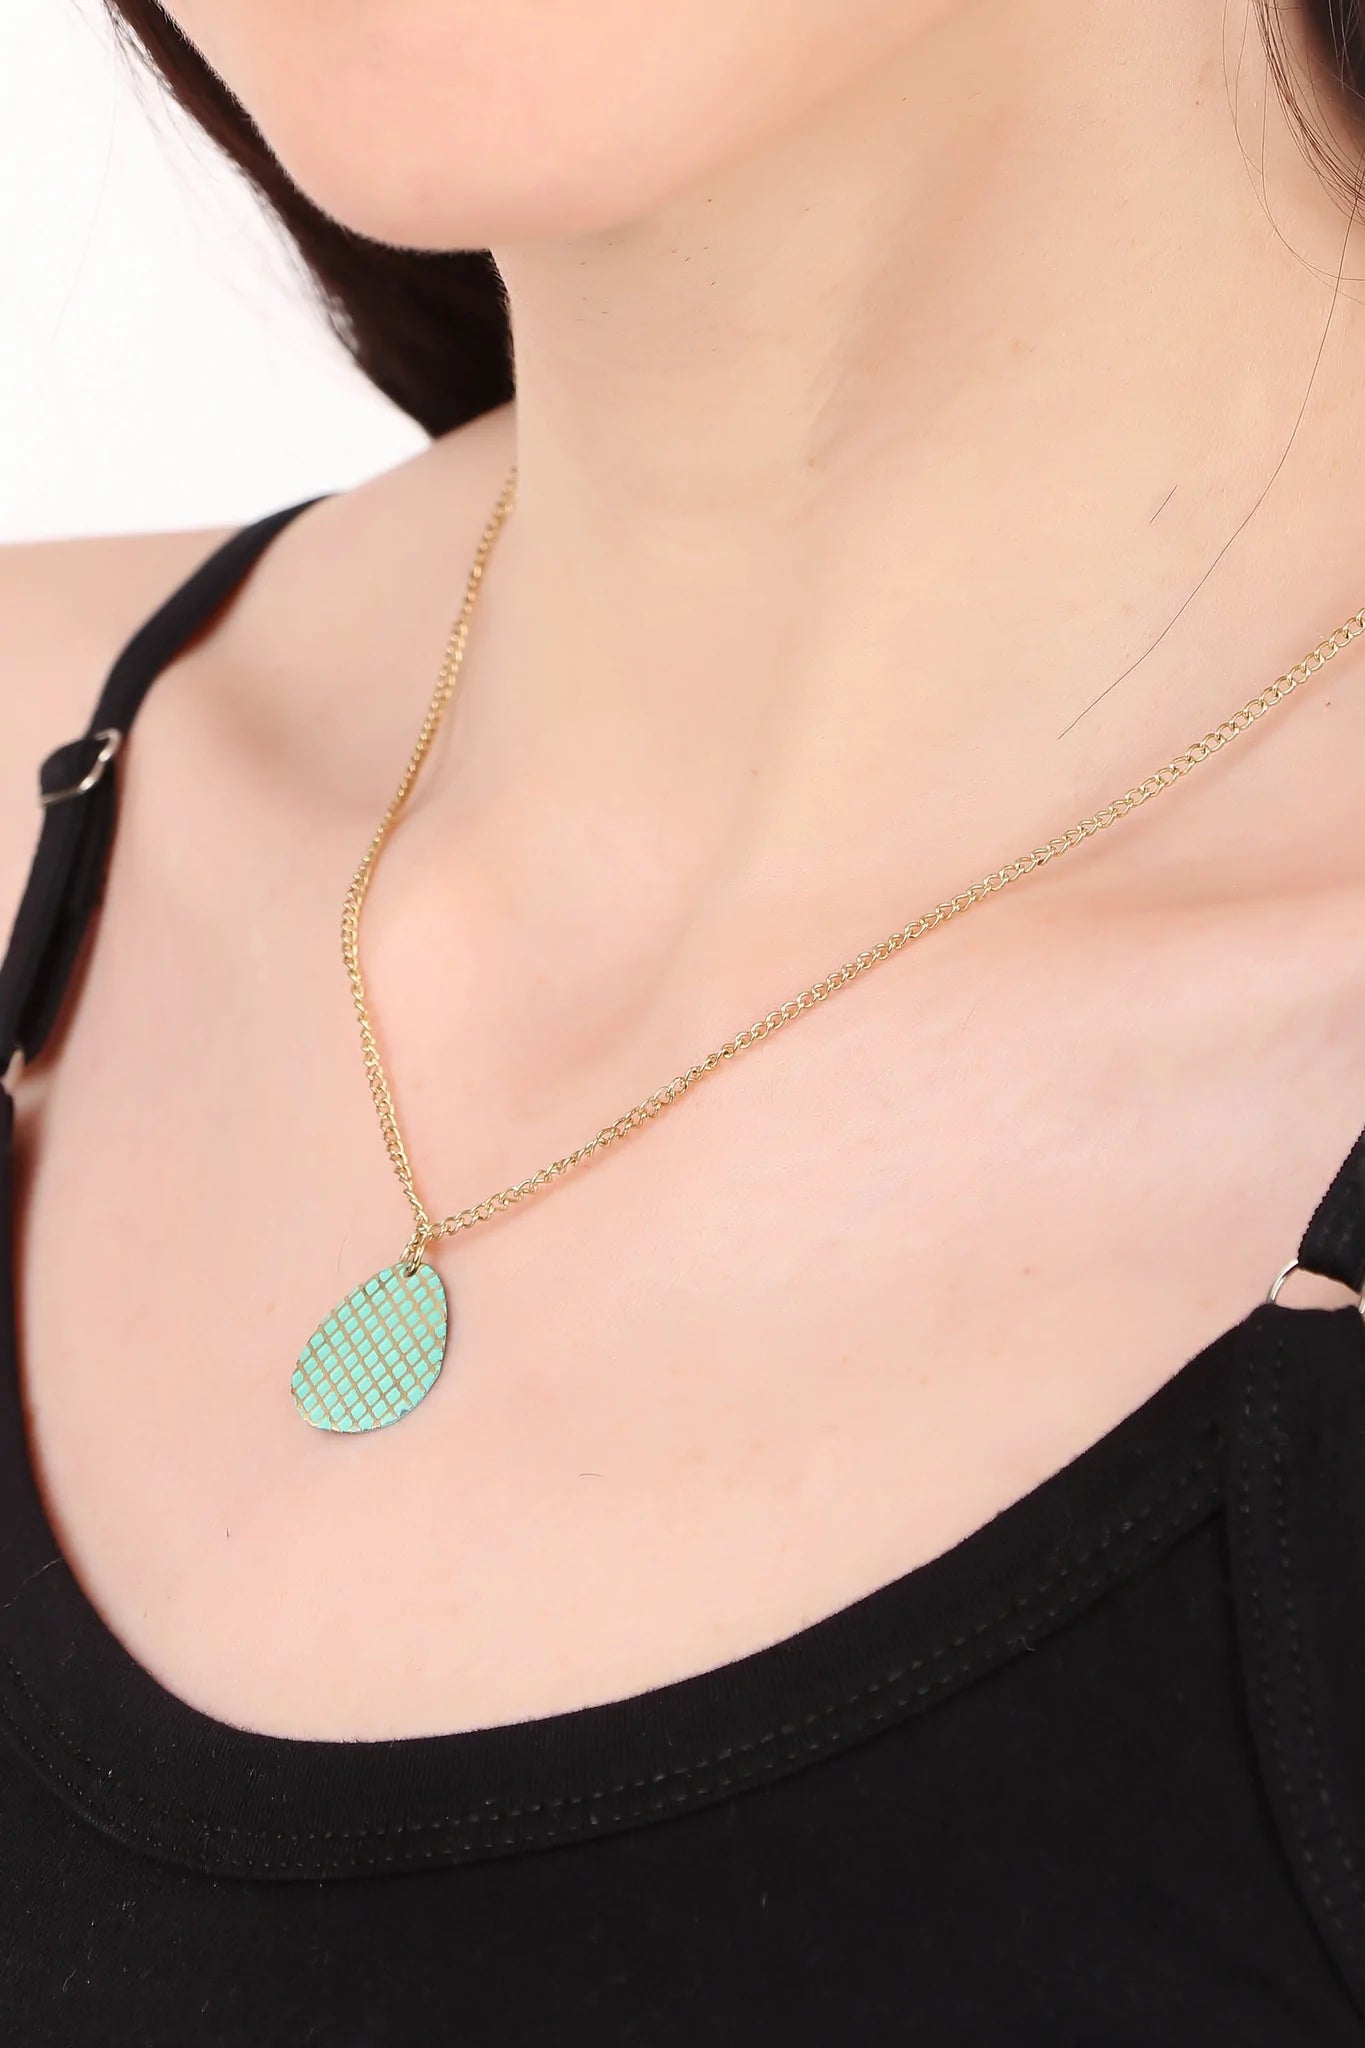 Green Maya Necklace - The Nancy Smillie Shop - Art, Jewellery & Designer Gifts Glasgow